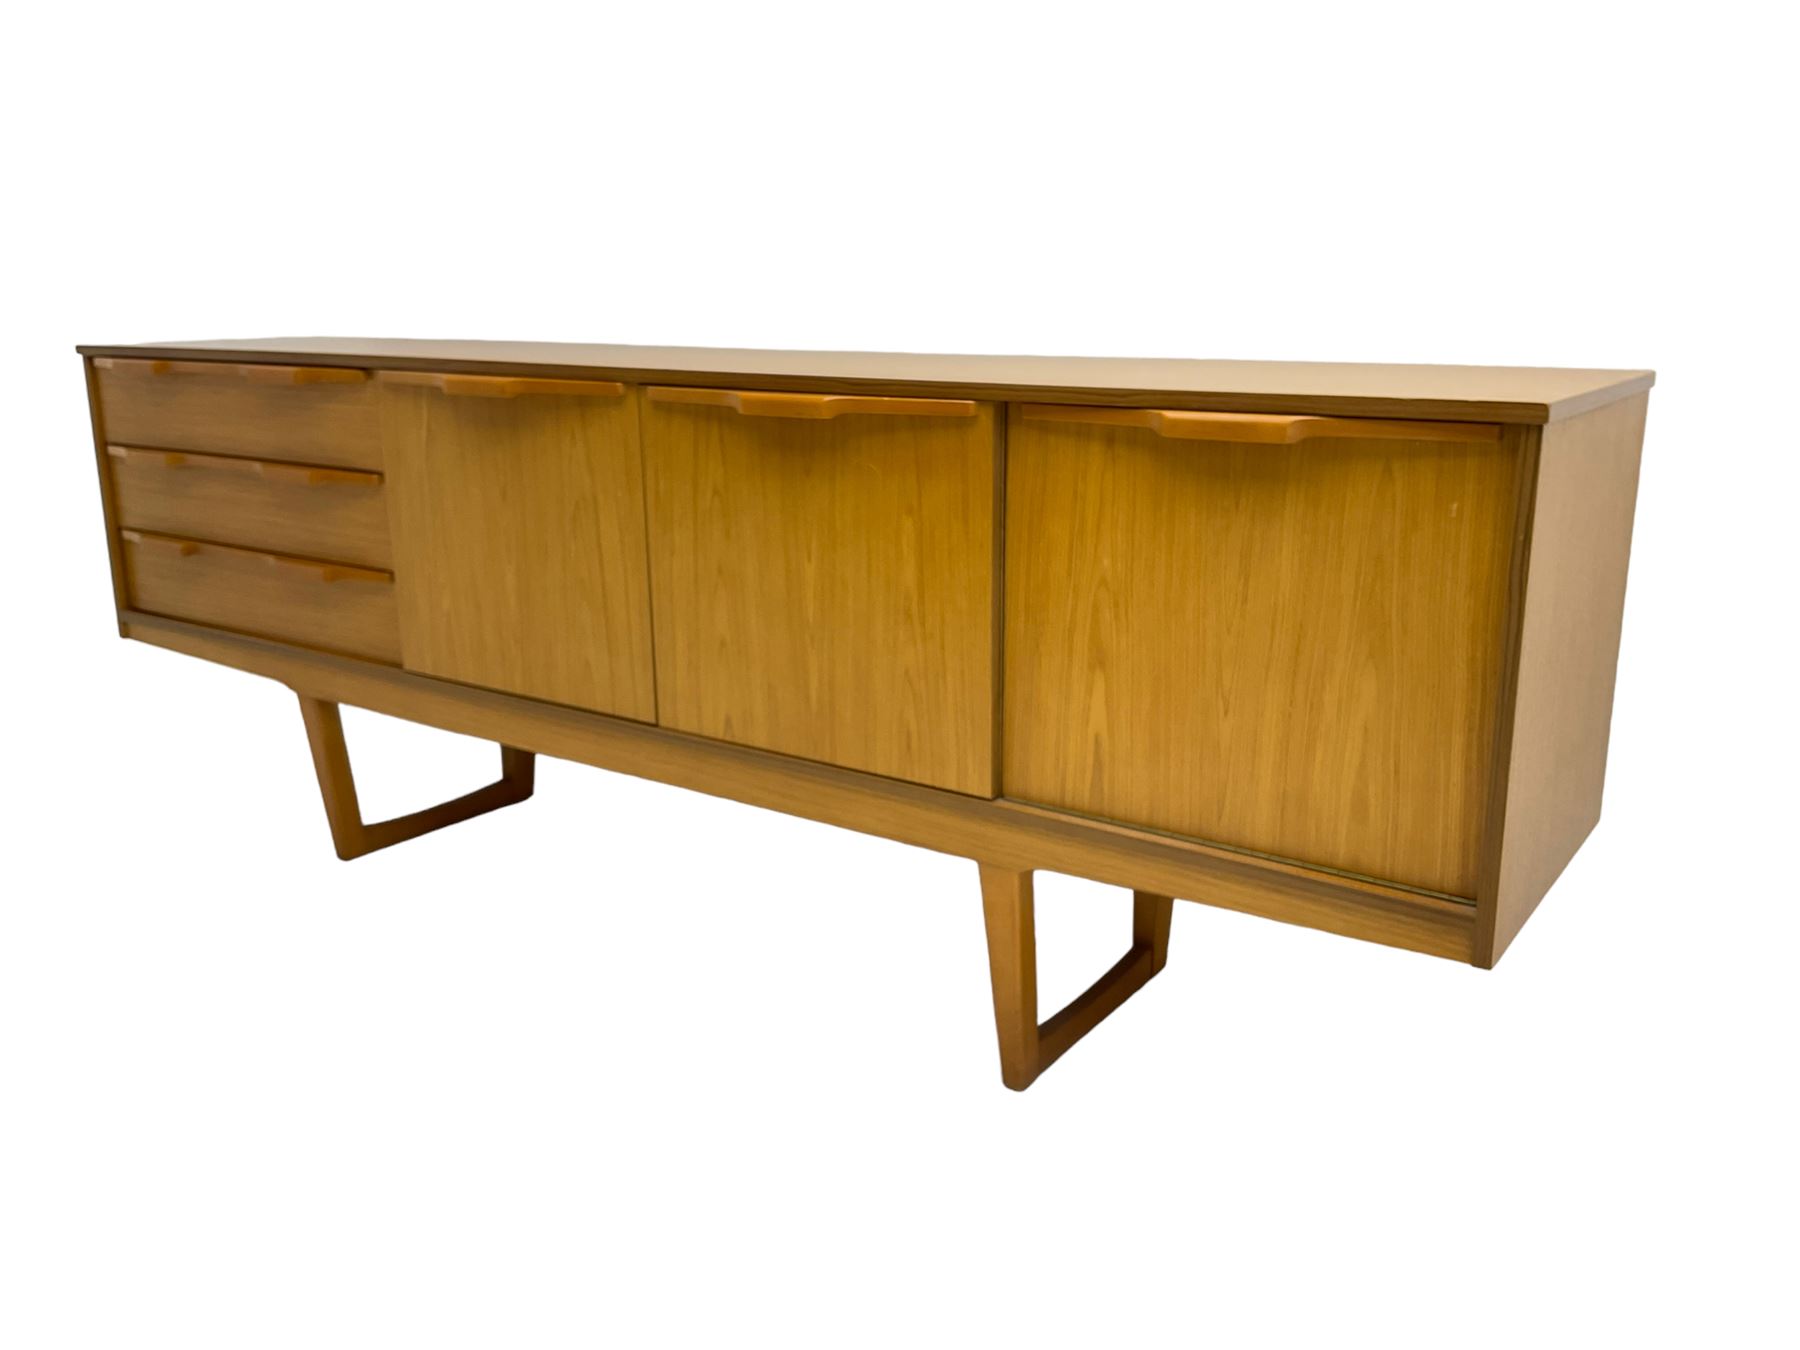 Stonehill Furniture (SF) Ltd - mid-20th century teak sideboard - Image 4 of 7